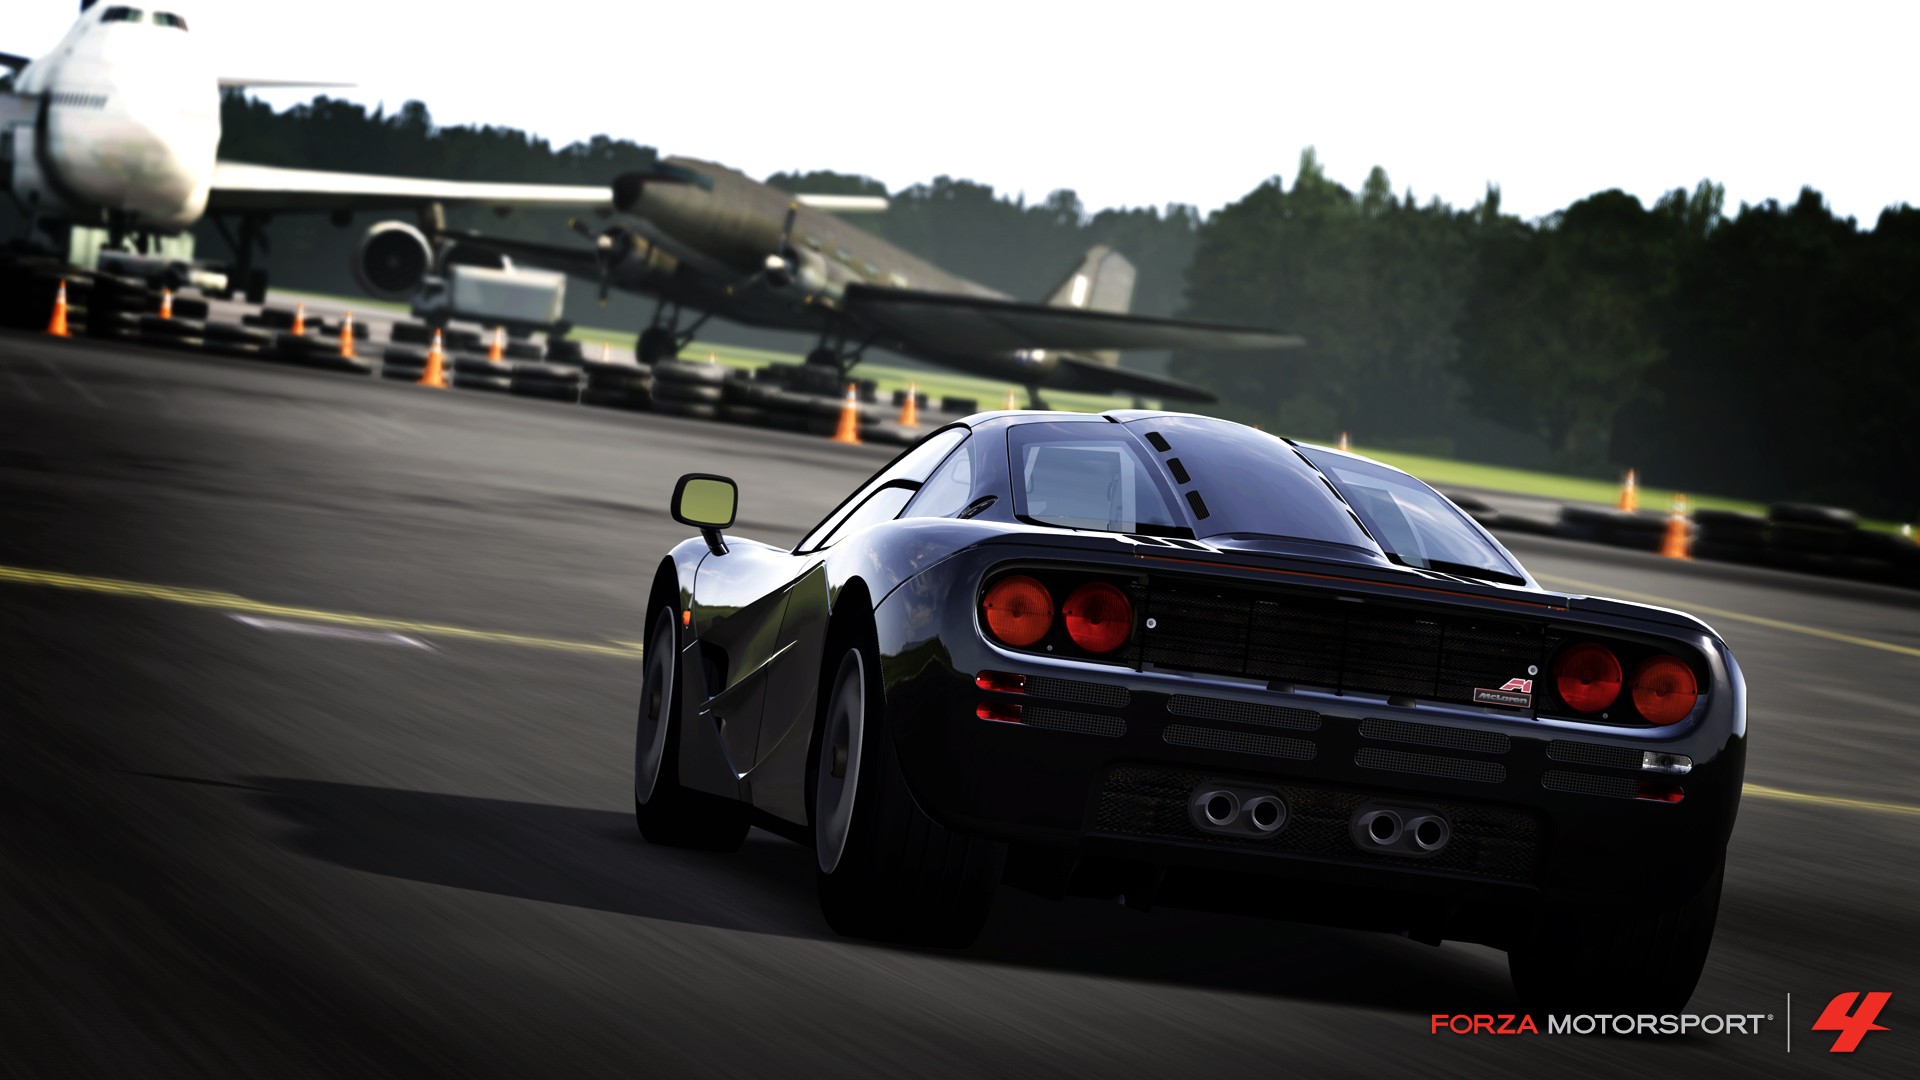 General 1920x1080 Forza Motorsport 4 car video games racing aircraft black cars Turn 10 Studios